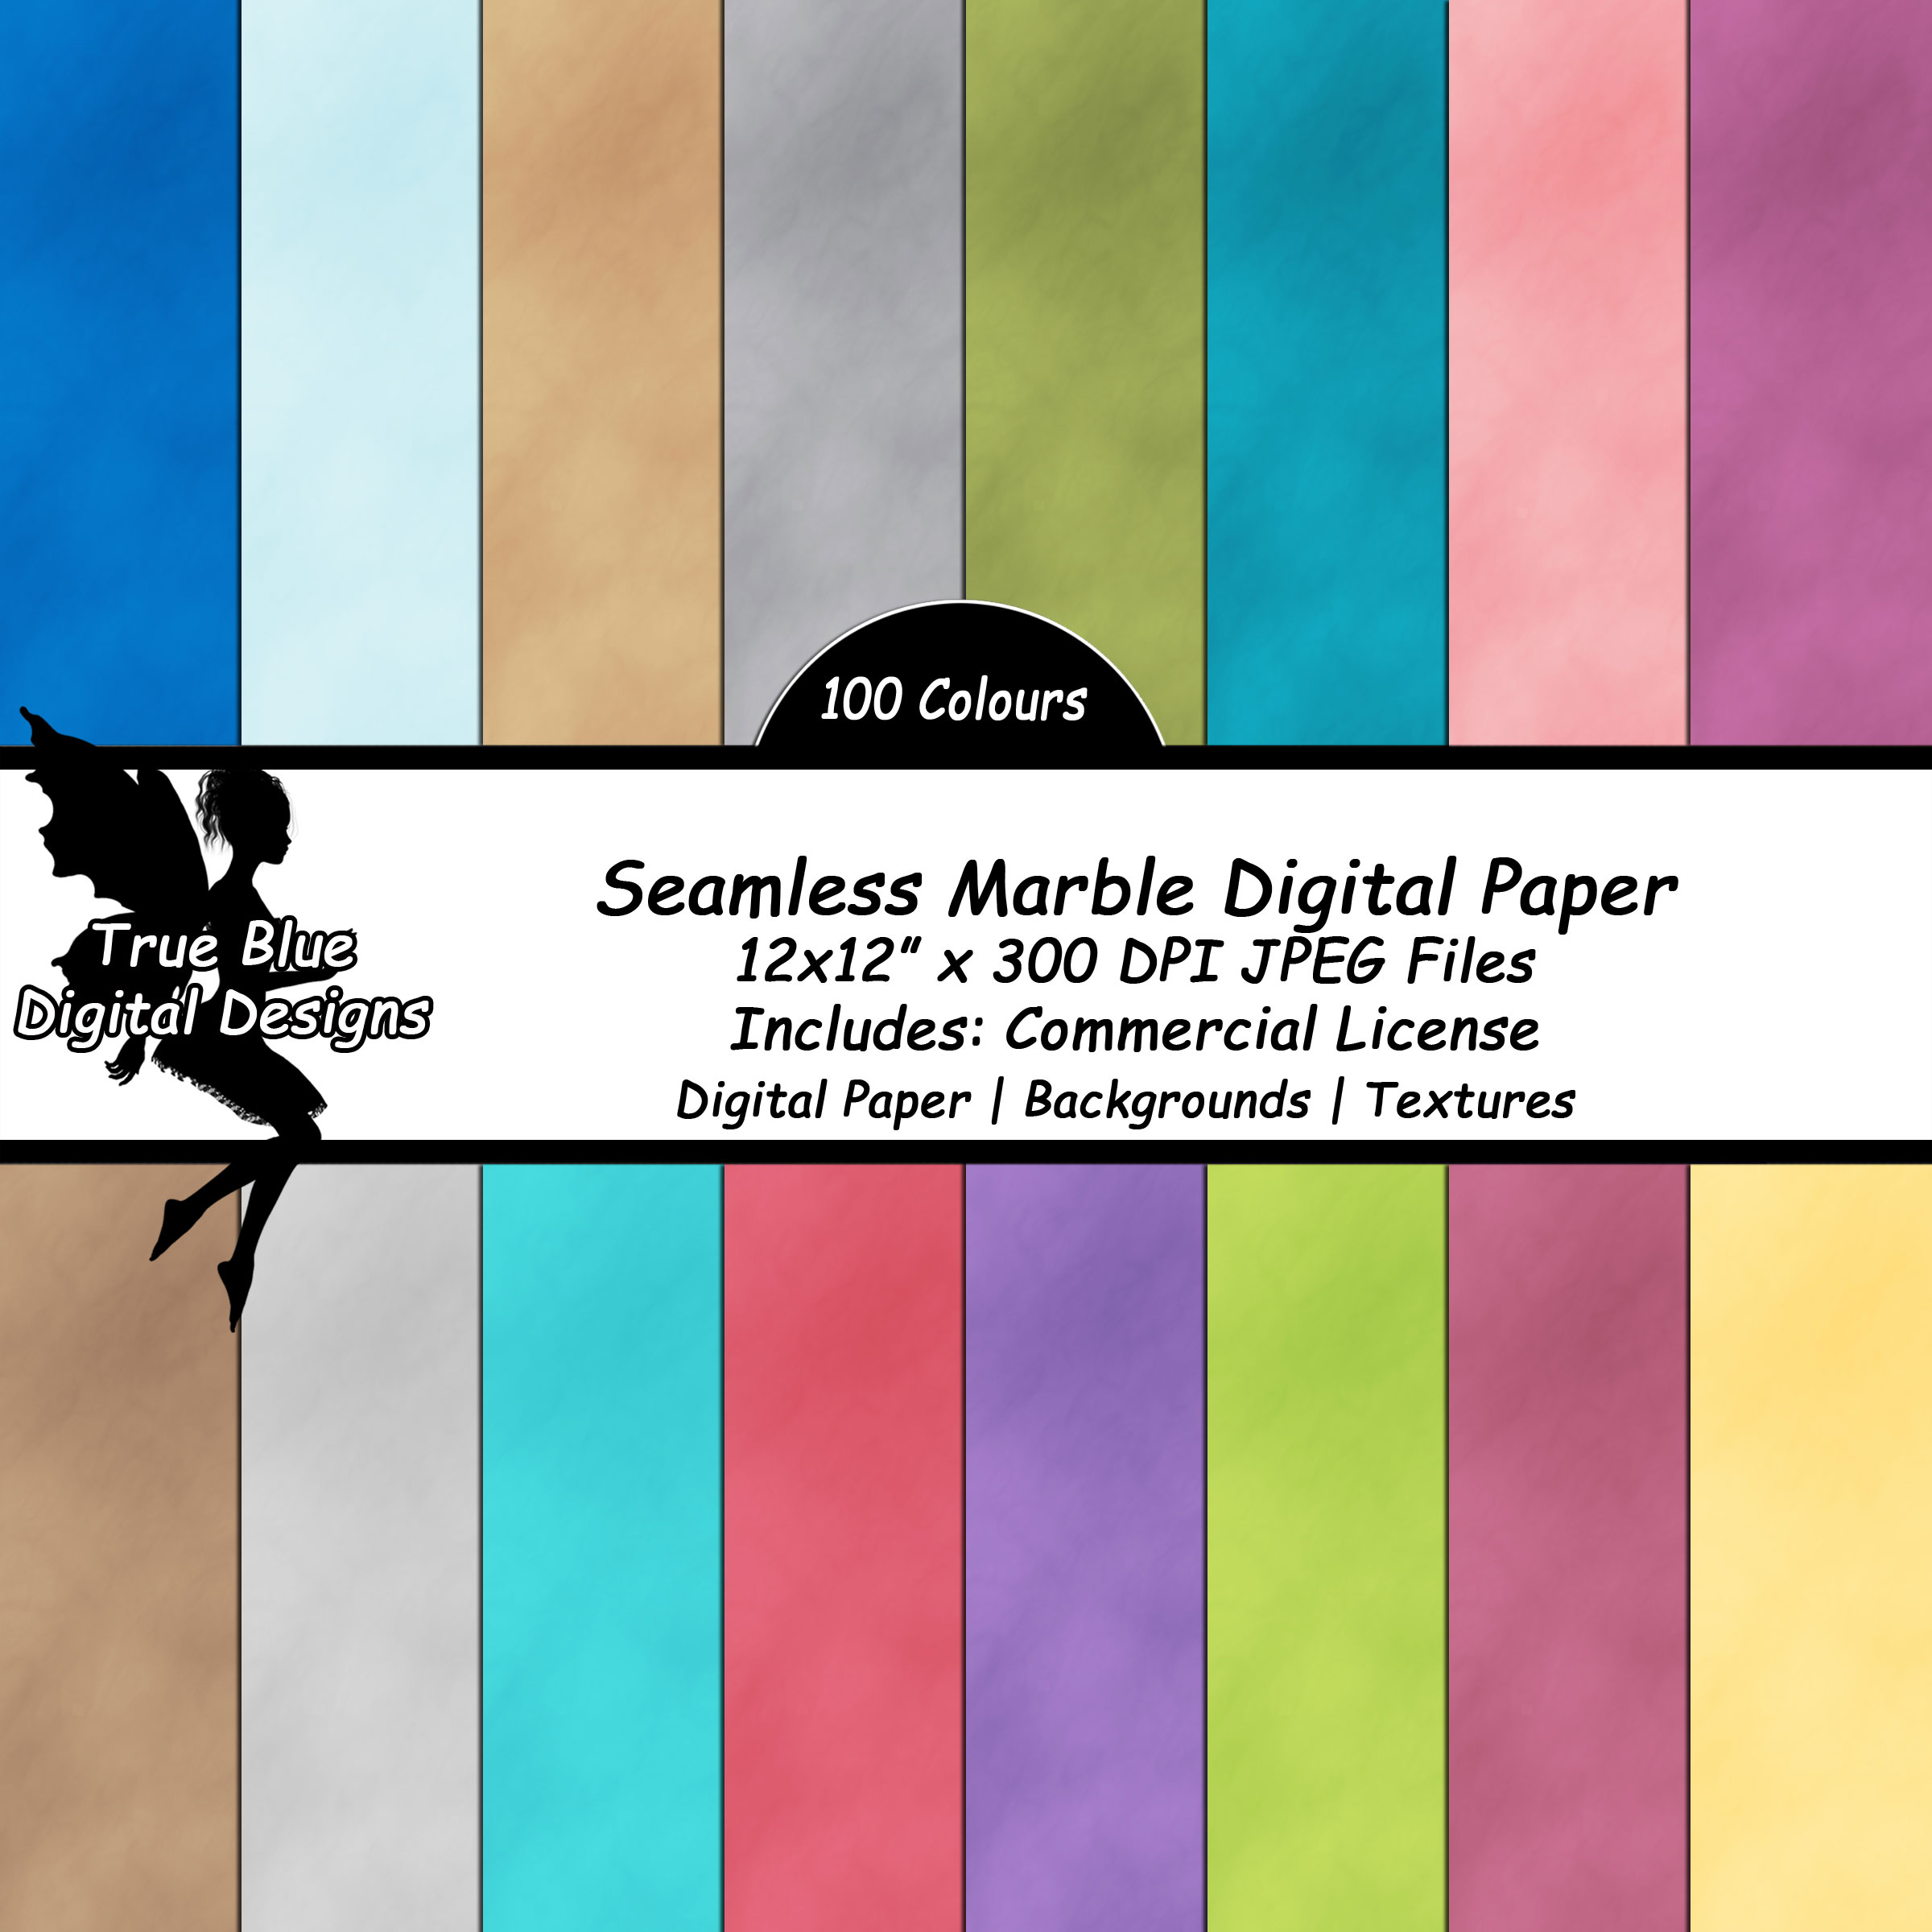 Seamless Marble Digital Paper